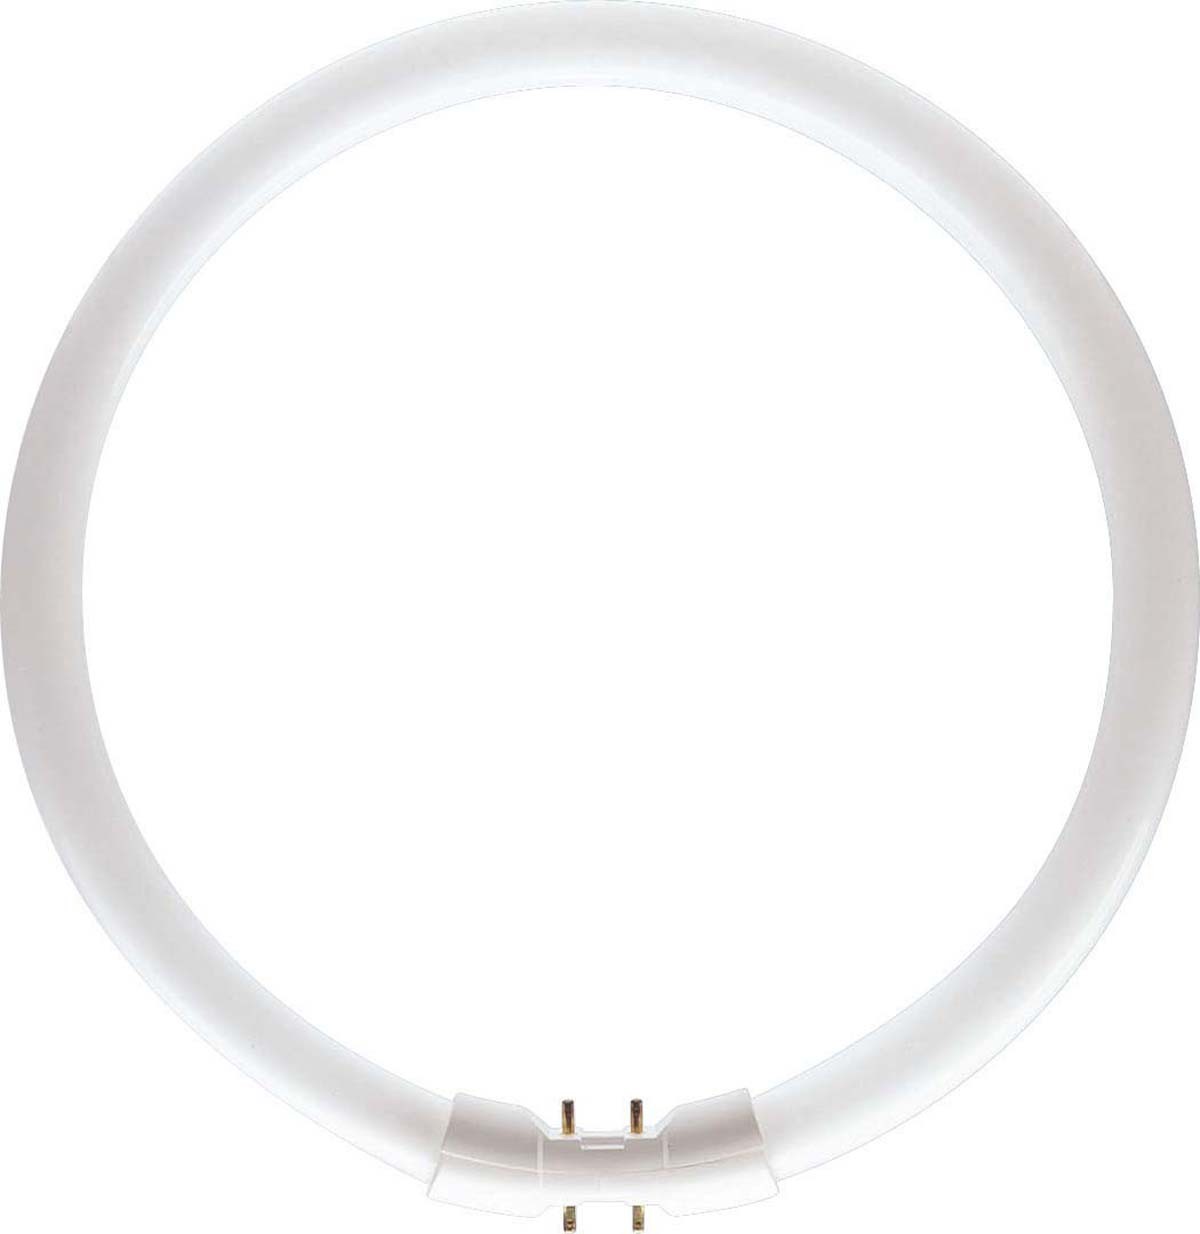 Philips Lighting Leuchtstofflampe 22W nws ringförmig TL5 C 22W/840 